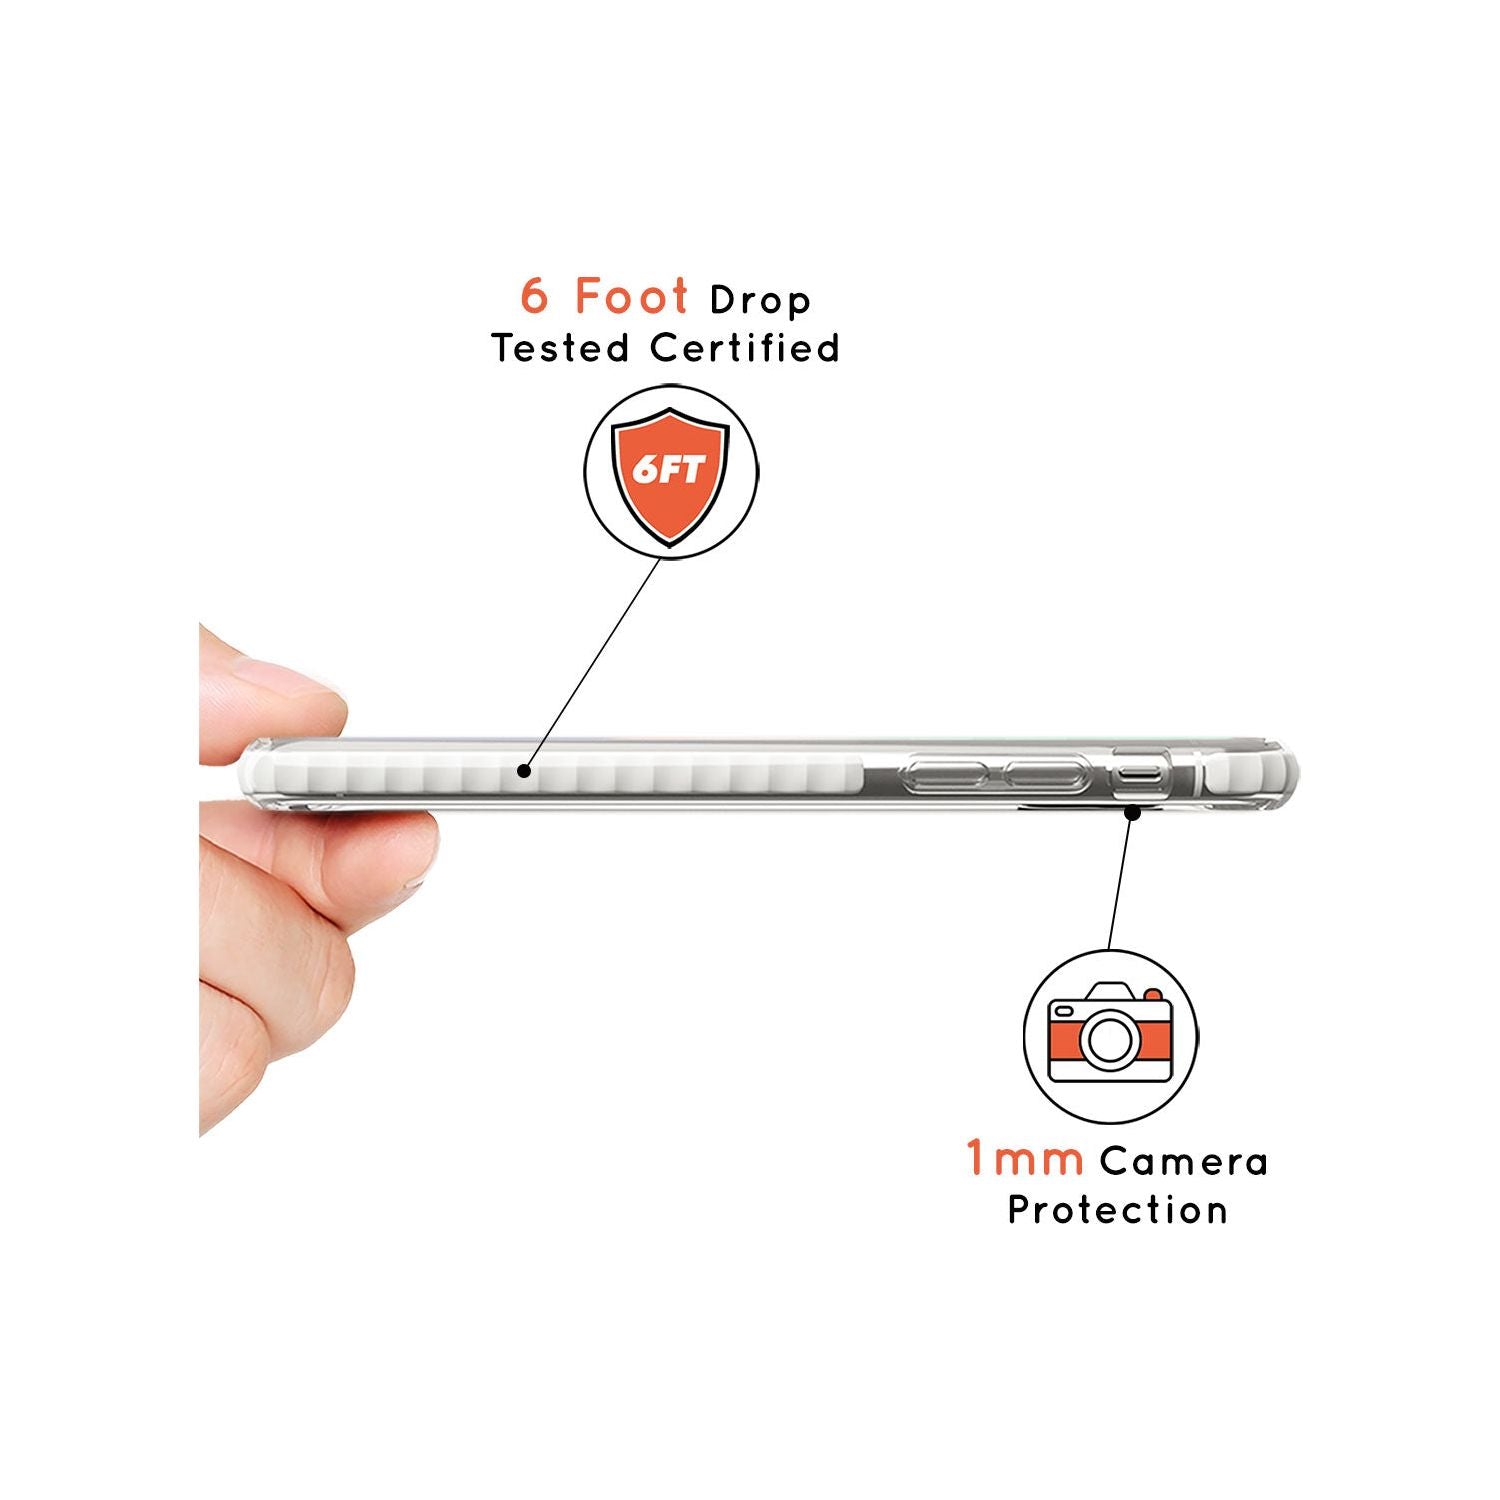 Simplistic Large Grid Pattern White (Transparent) Impact Phone Case for iPhone SE 8 7 Plus